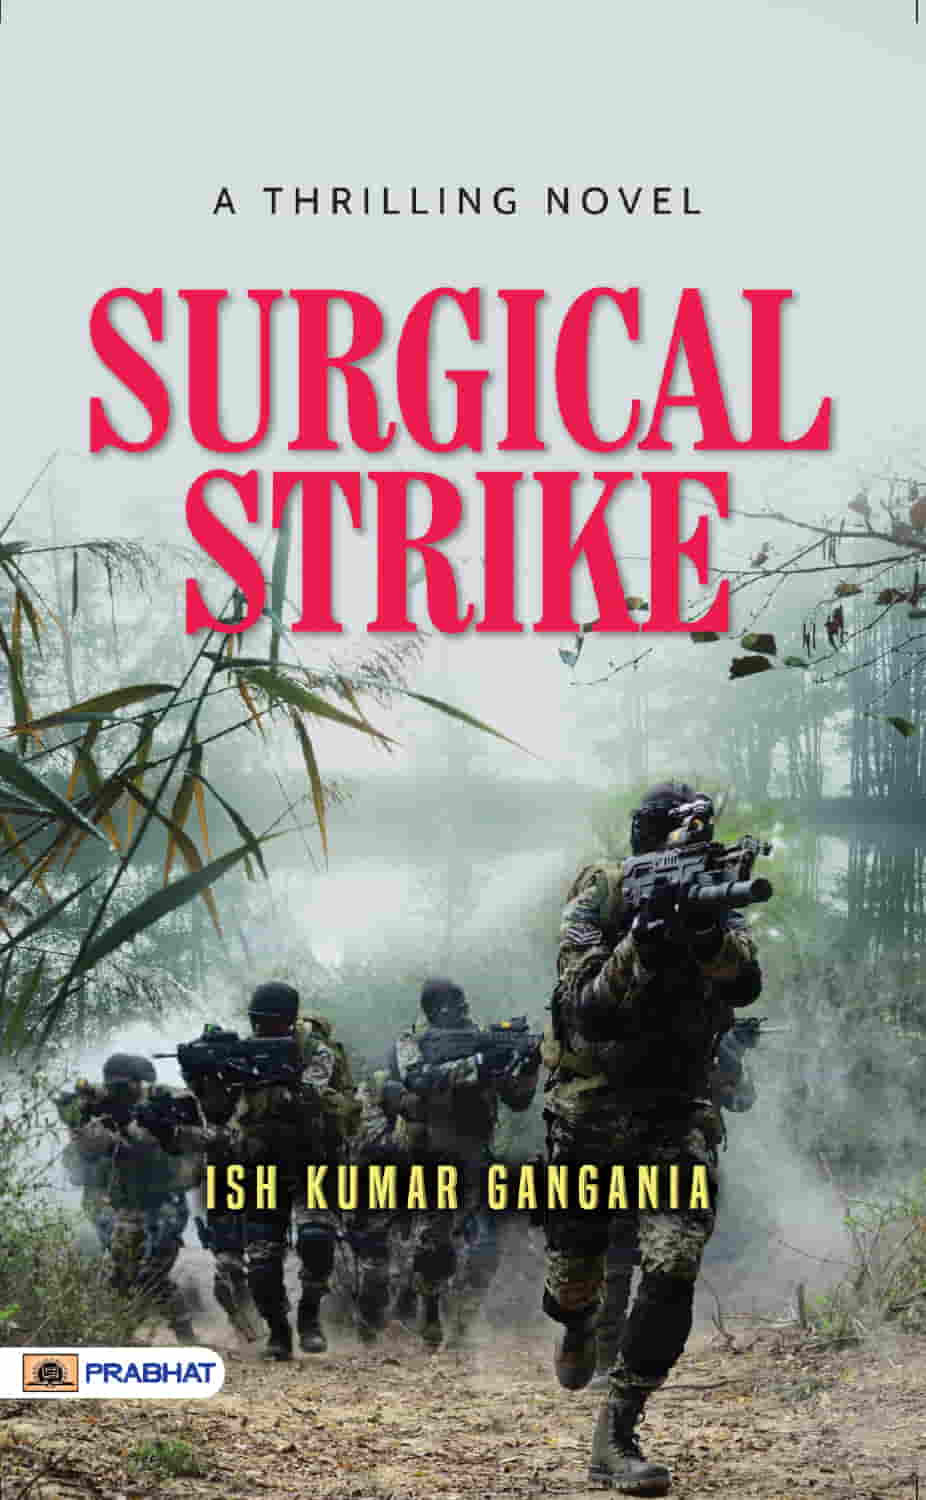 A Thrilling Novel Surgical Strike